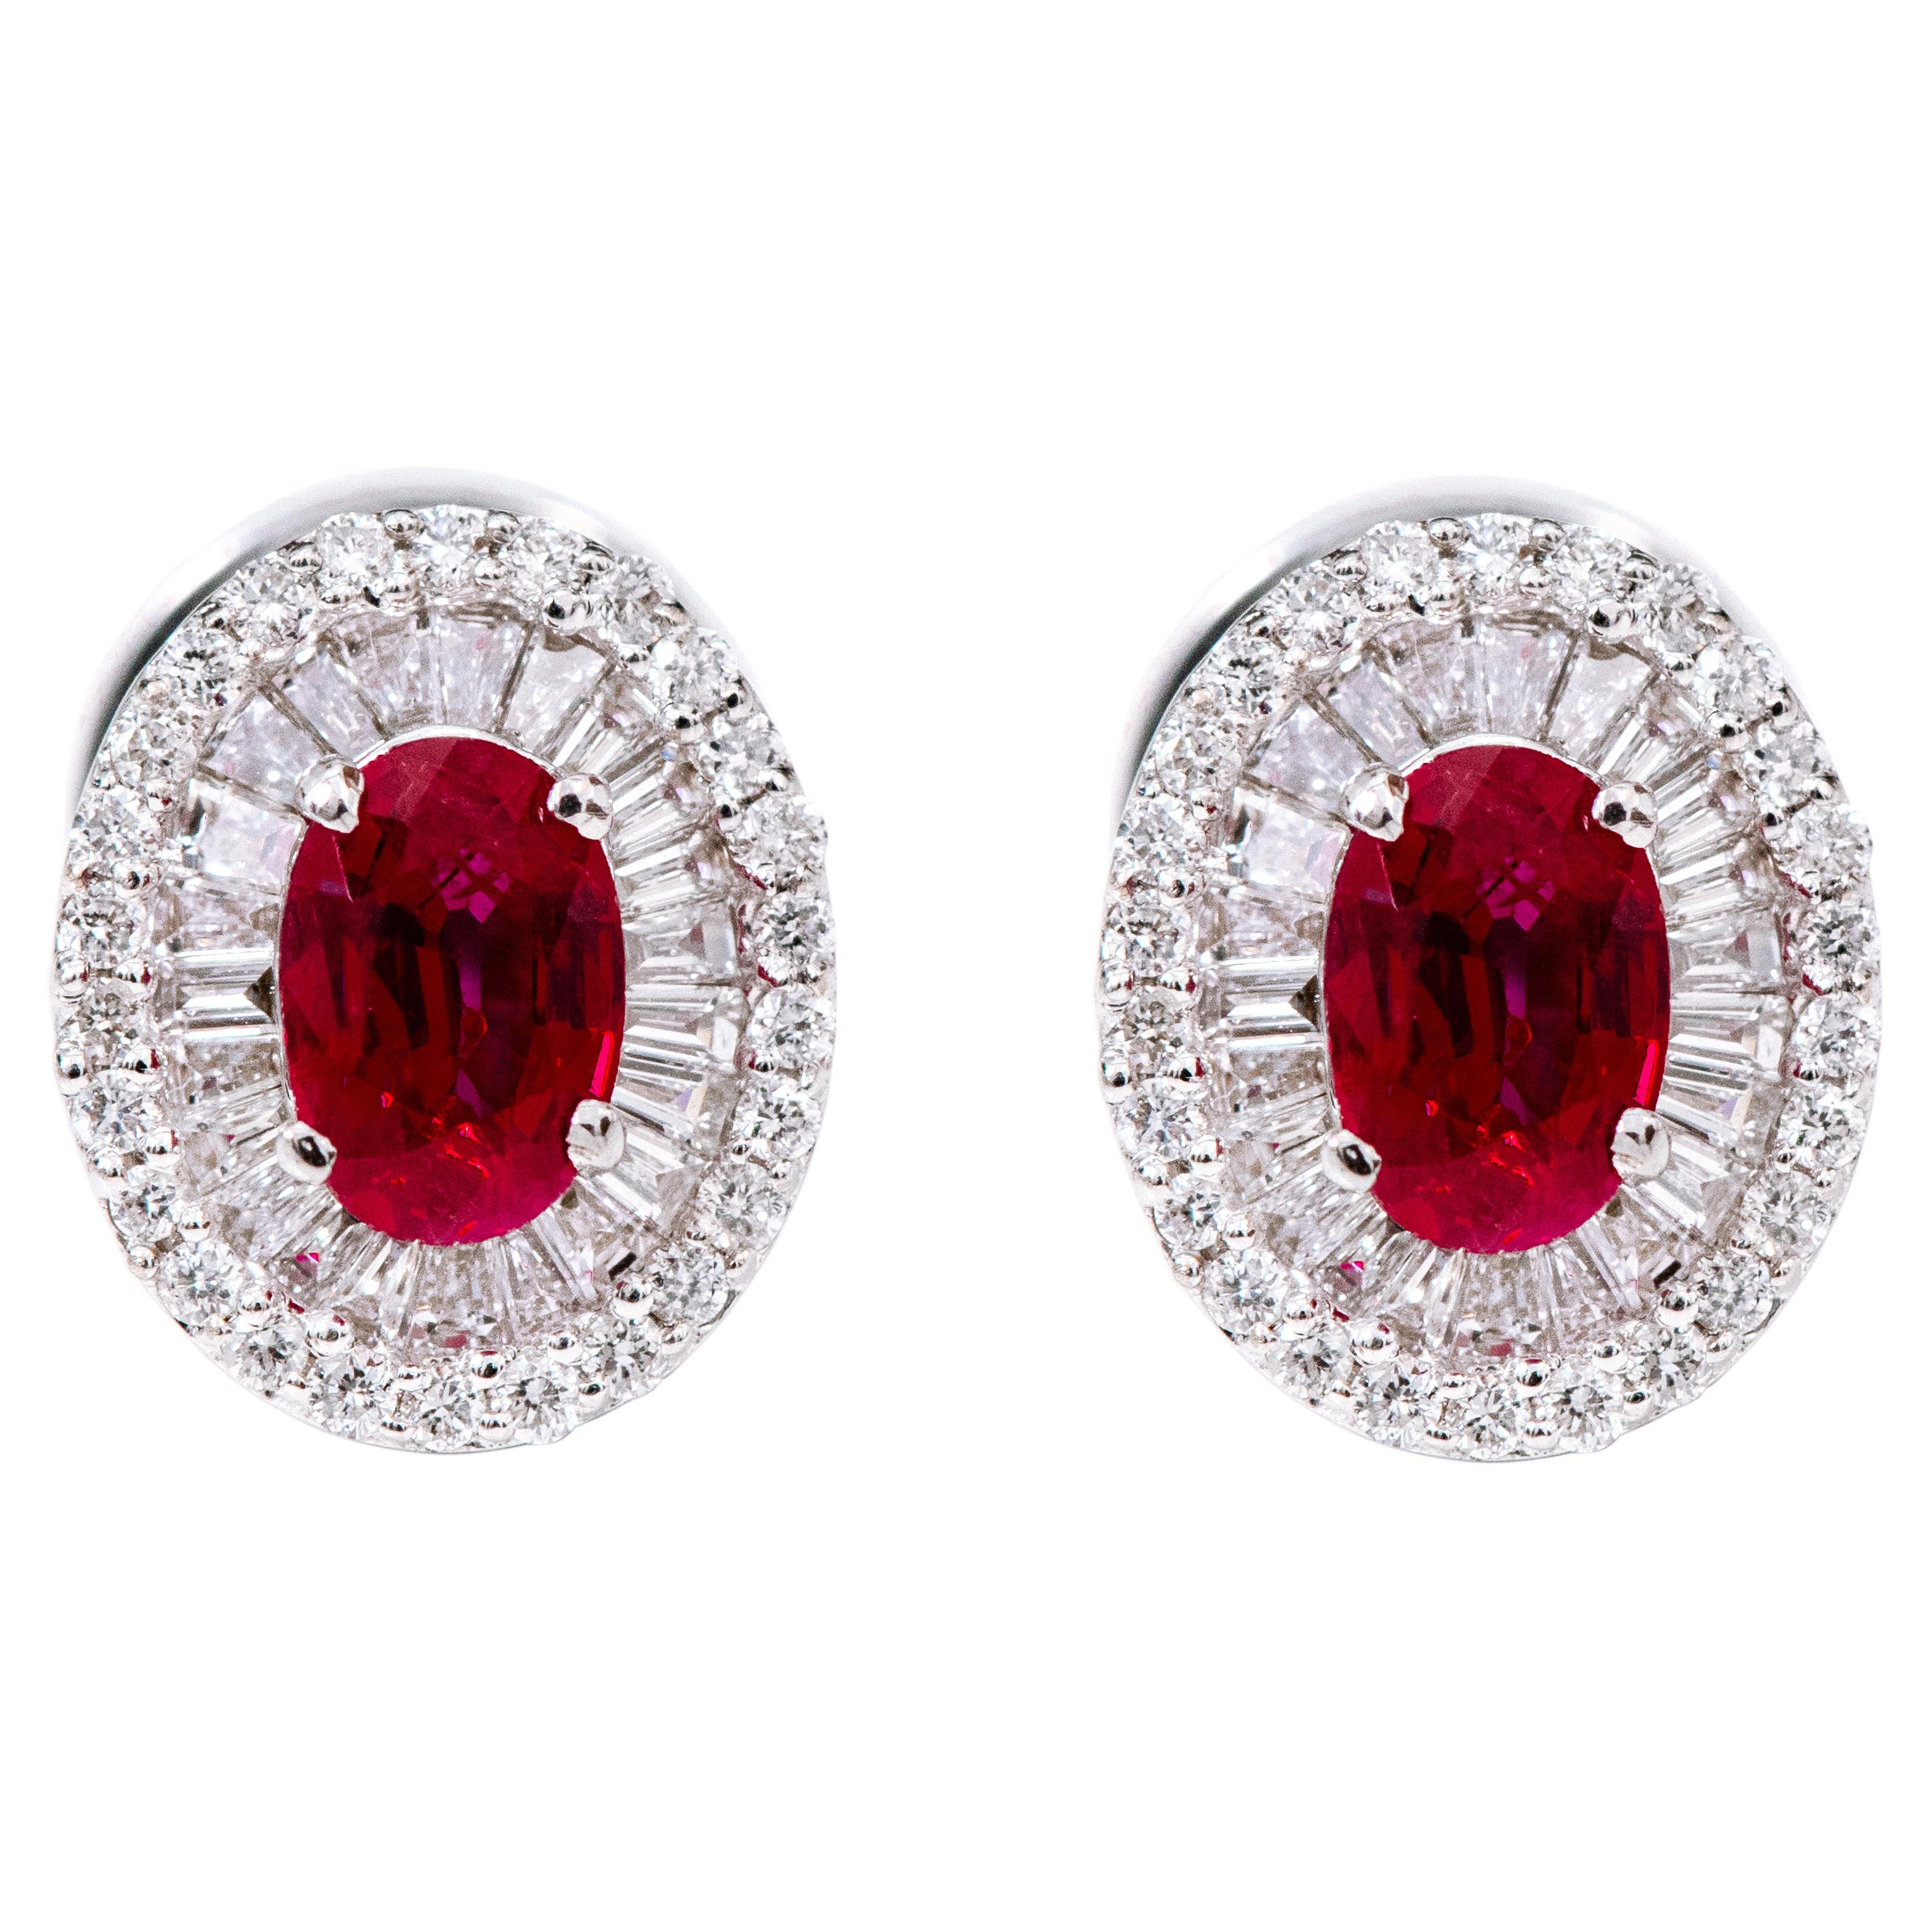 18 Karat White Gold 1.98 Carat Ruby and Diamond Cluster Stud Earrings